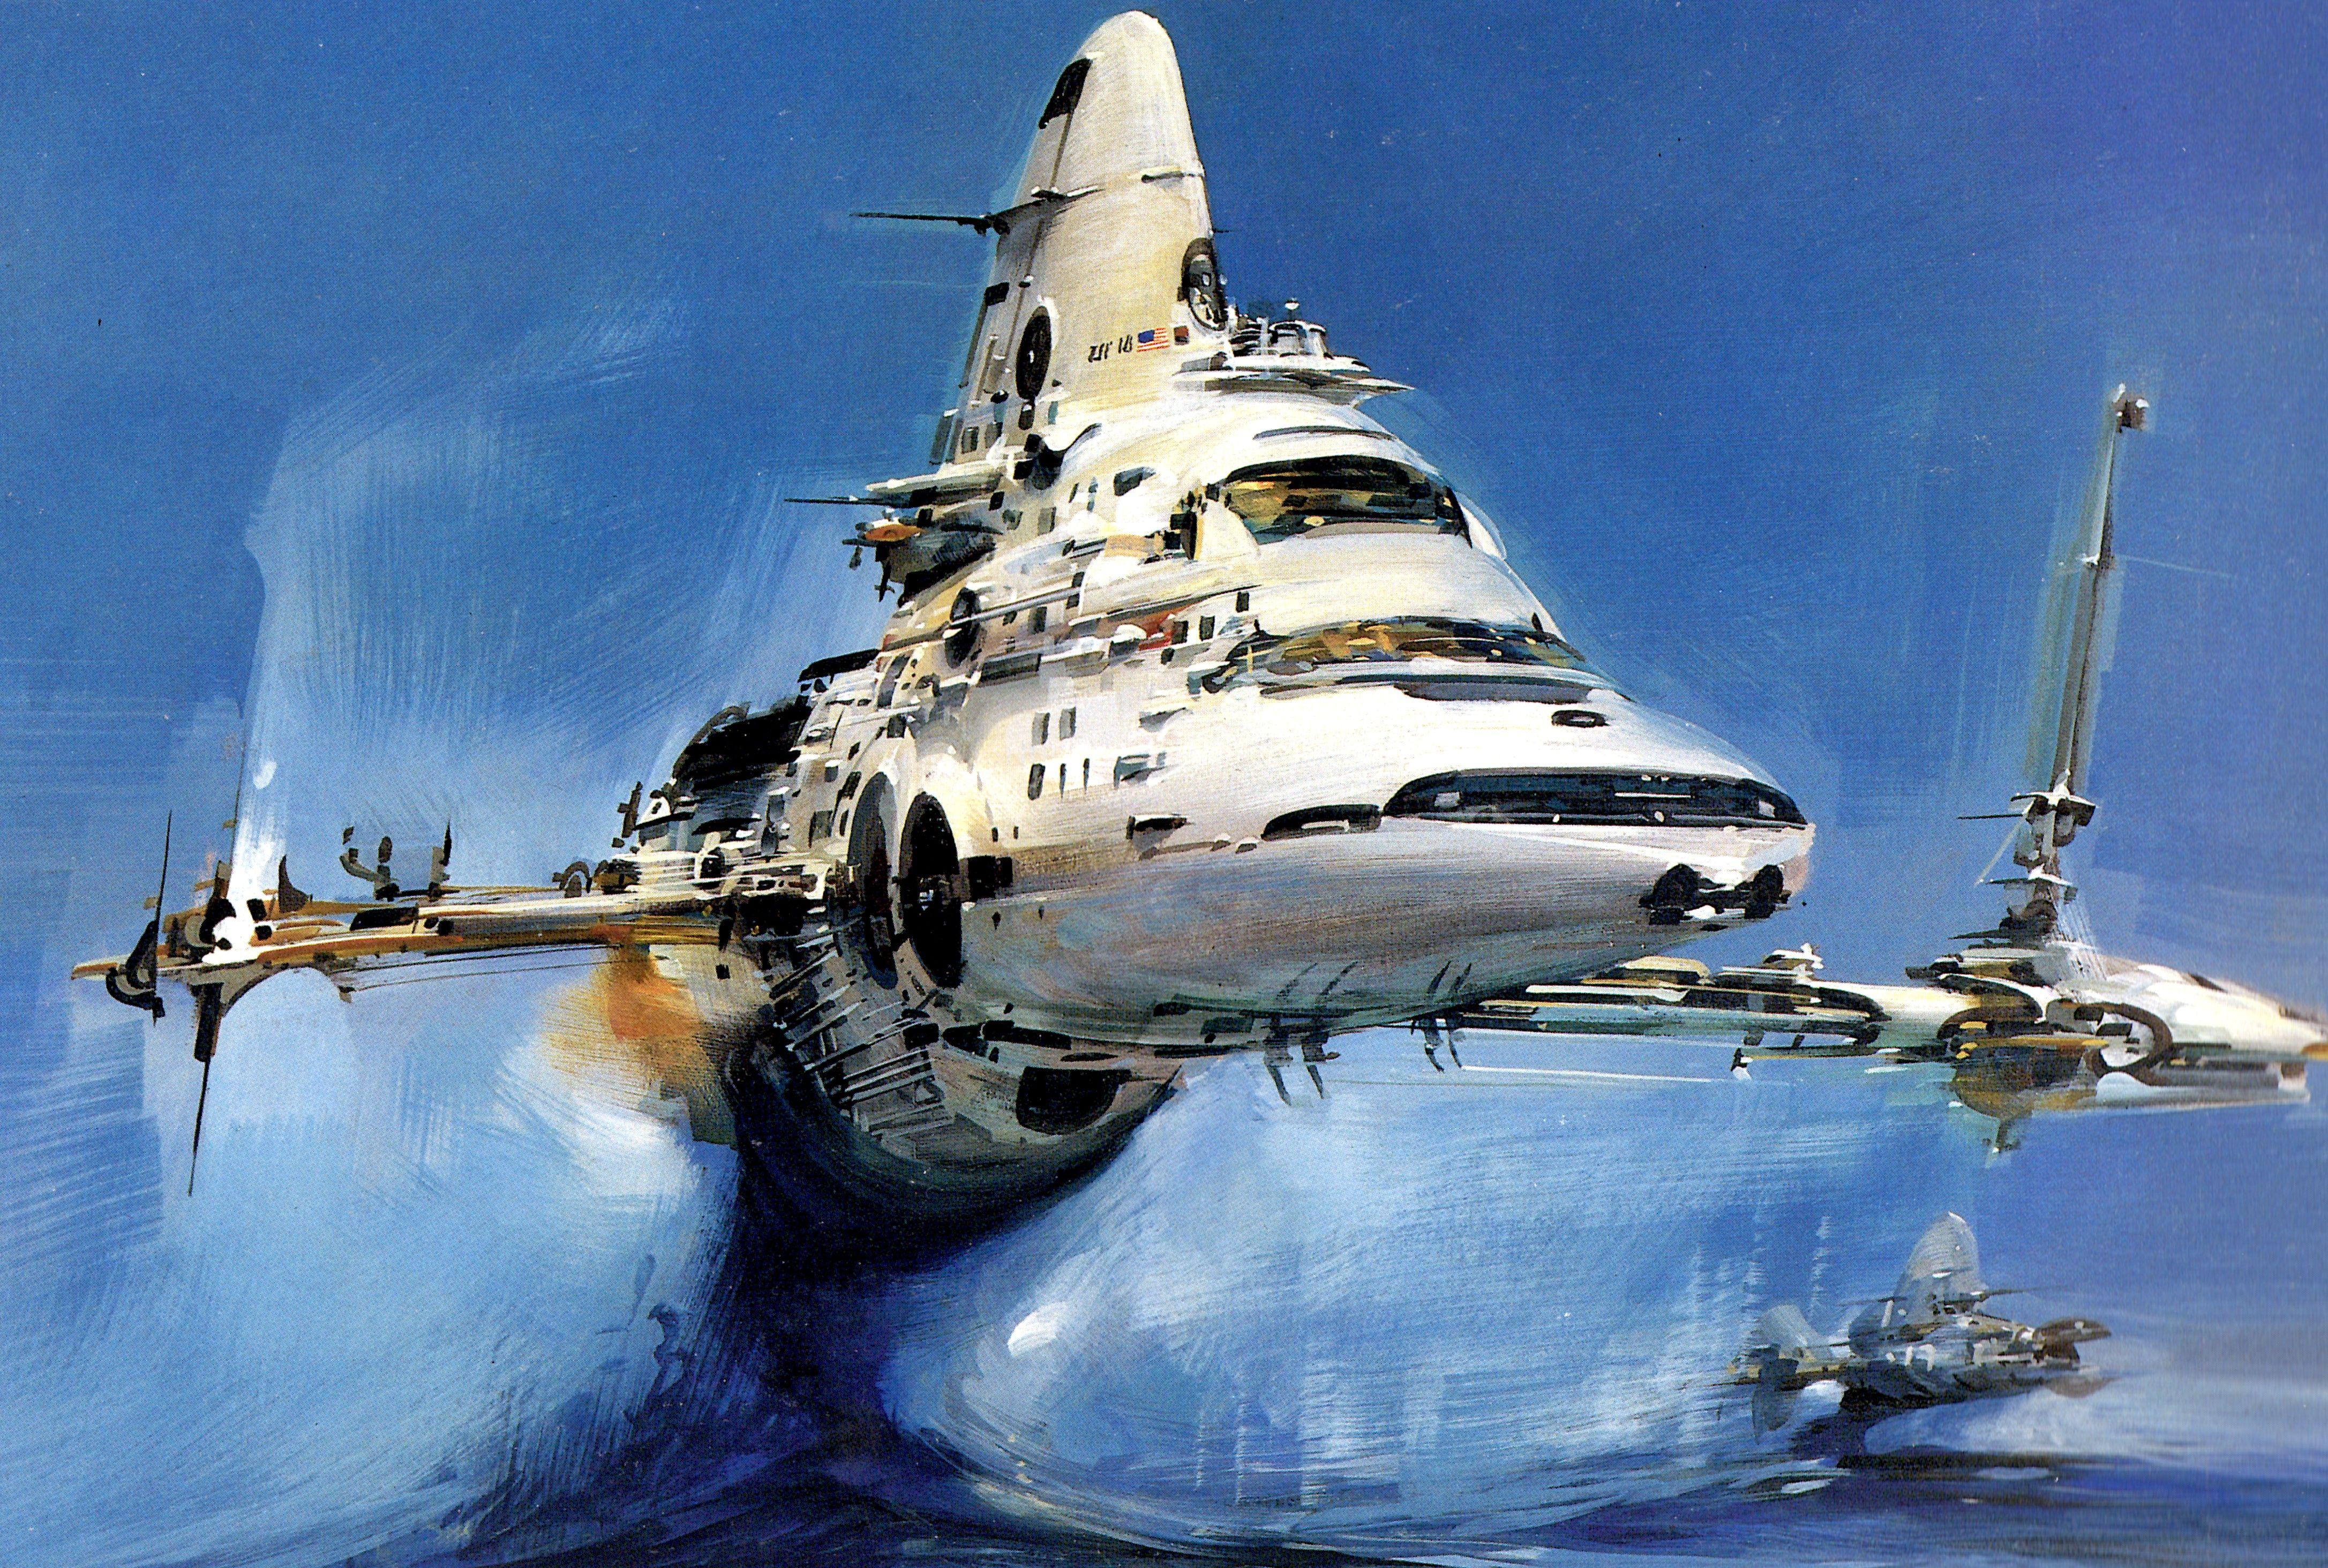 Sci Fi Spaceship Wallpaper. Science fiction art